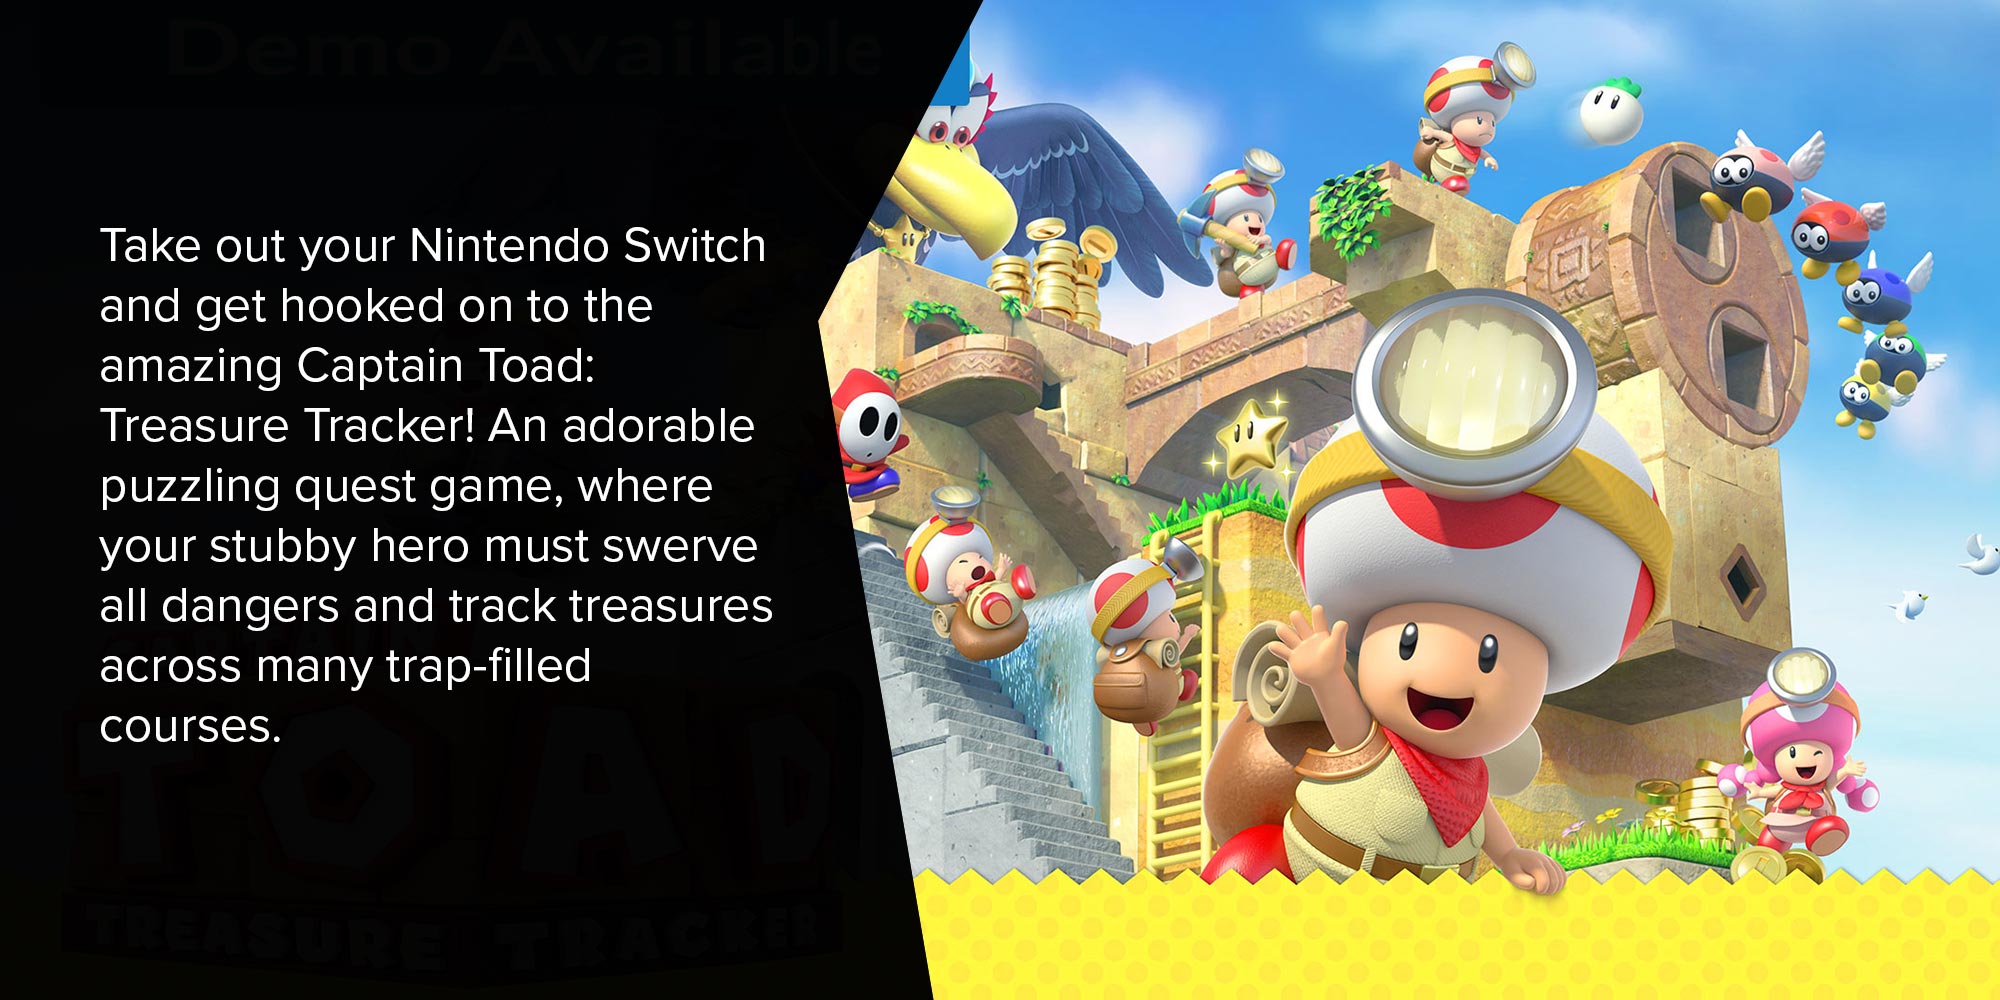 Captain Toad : Treasure Tracker (Intl Version) - Strategy - Nintendo Switch